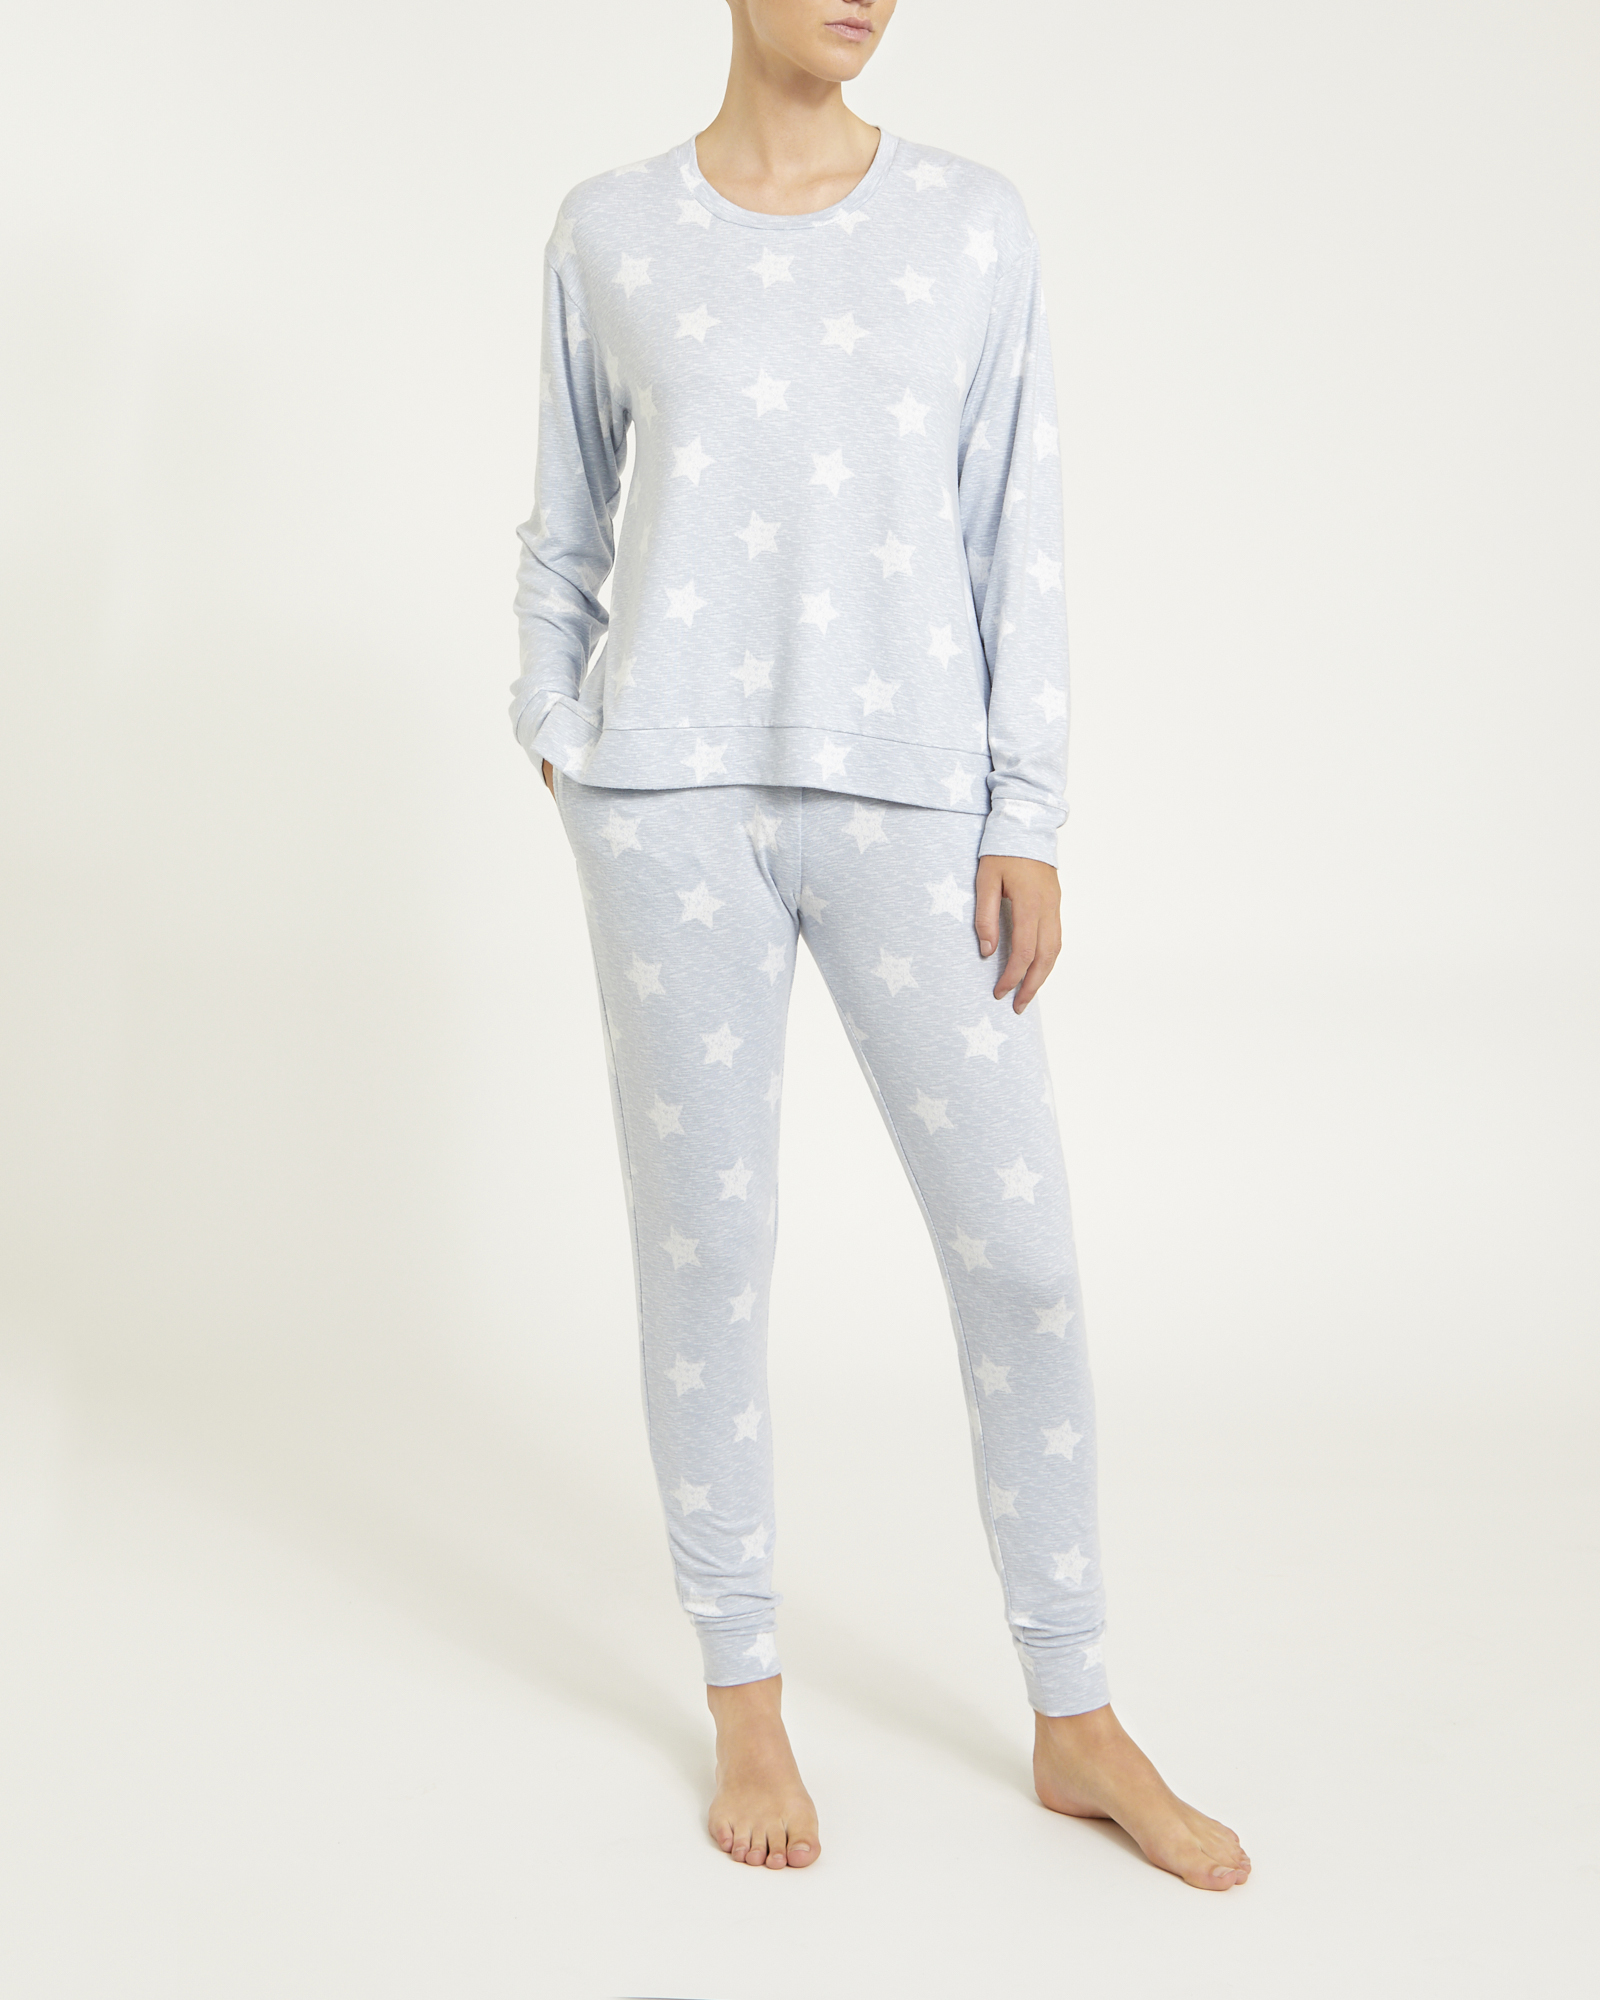 Dunnes Stores Star Star Soft Pyjamas 